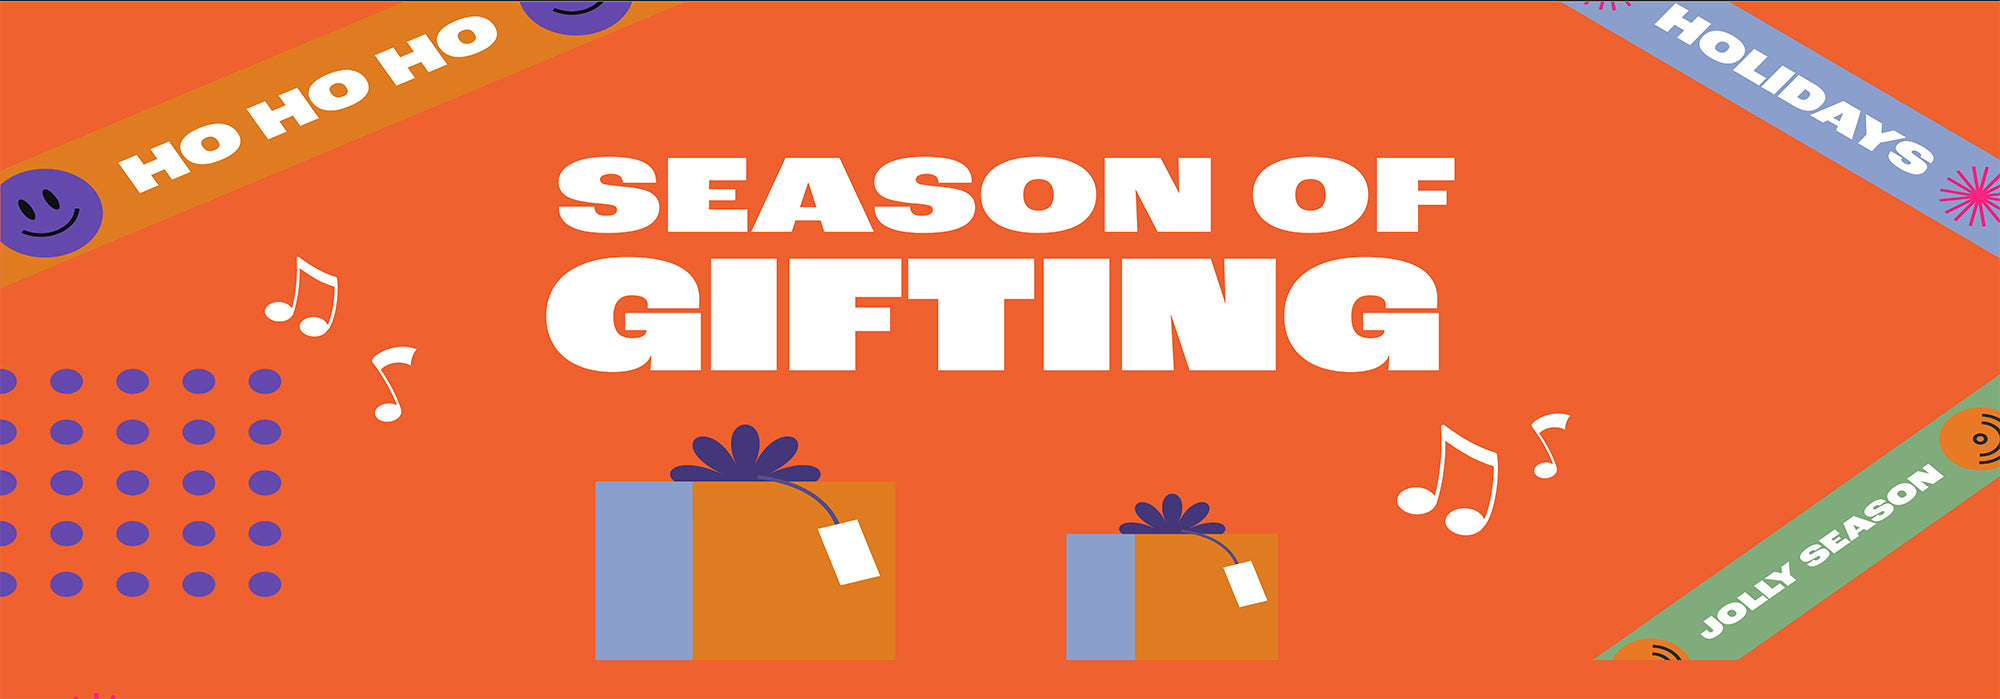 Friends - Season of Gifting